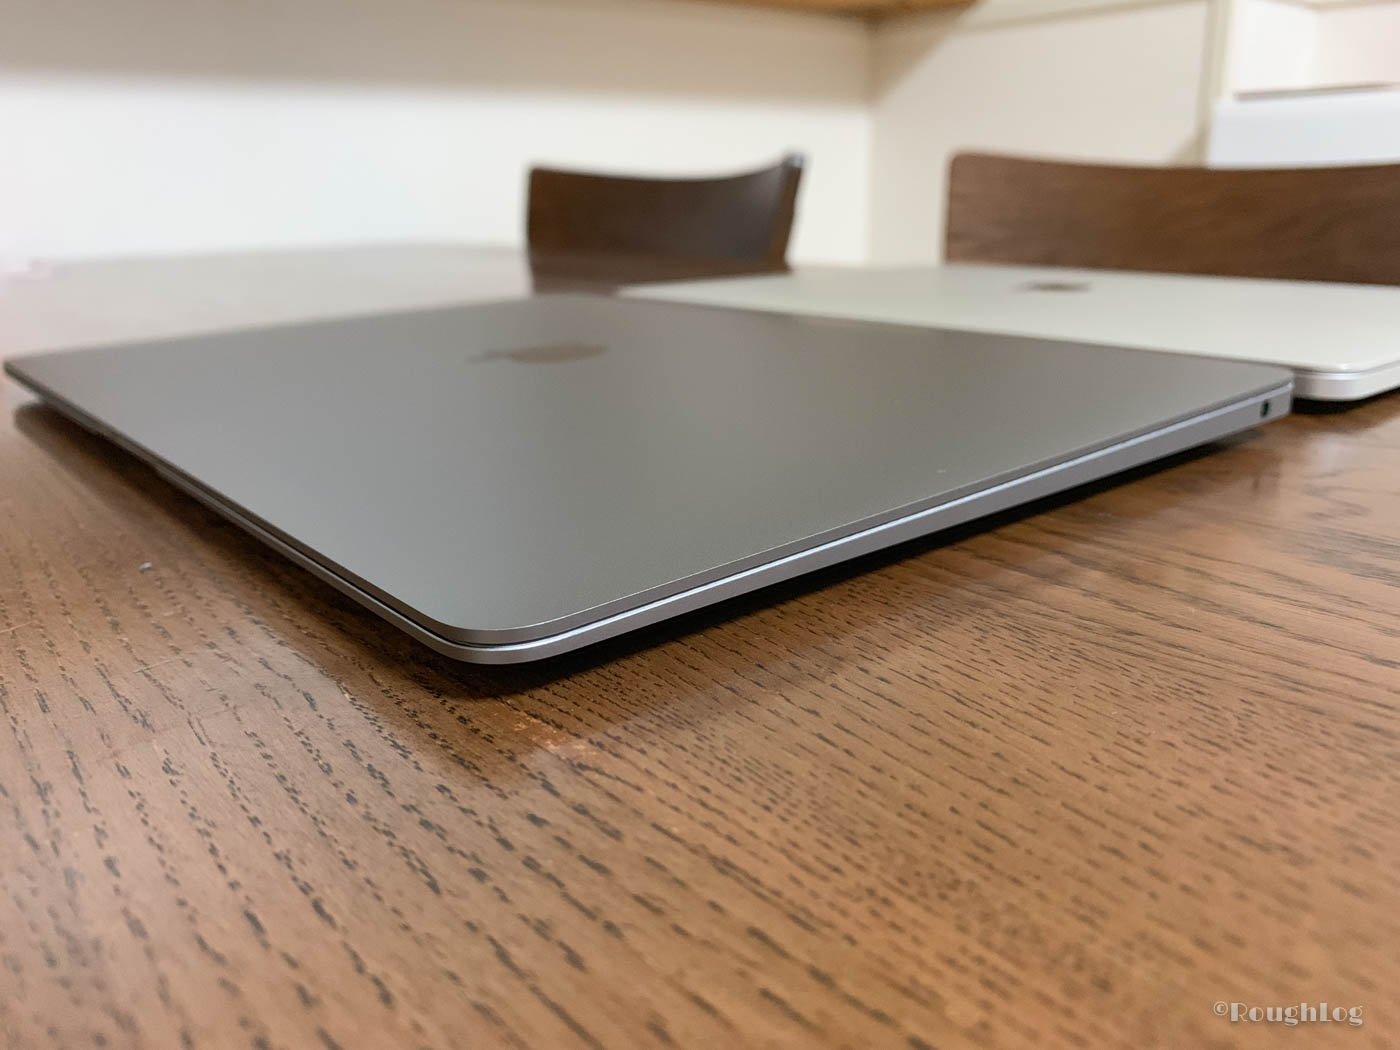 MacBook Air 2018の形状は従来同様に本体の先端が細くなるウェッジシェイプ型の美しいデザイン